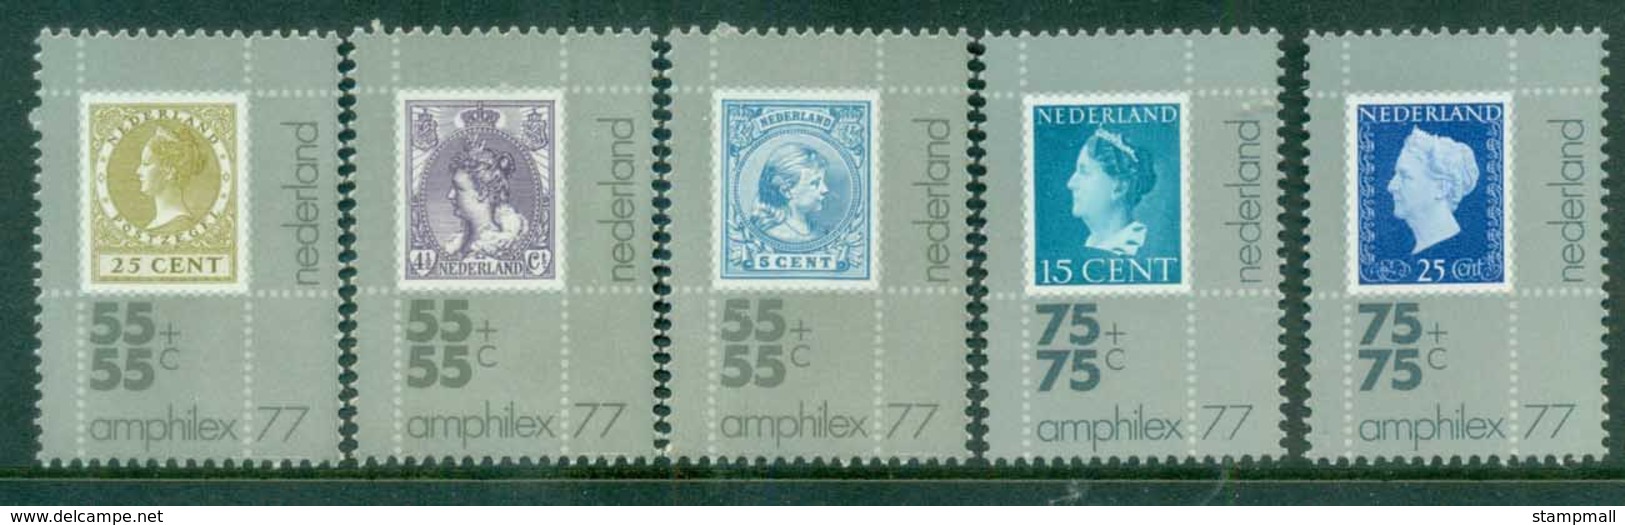 Netherlands 1976 Charity, Amphilex Stamp Ex. MUH Lot76581 - Unclassified